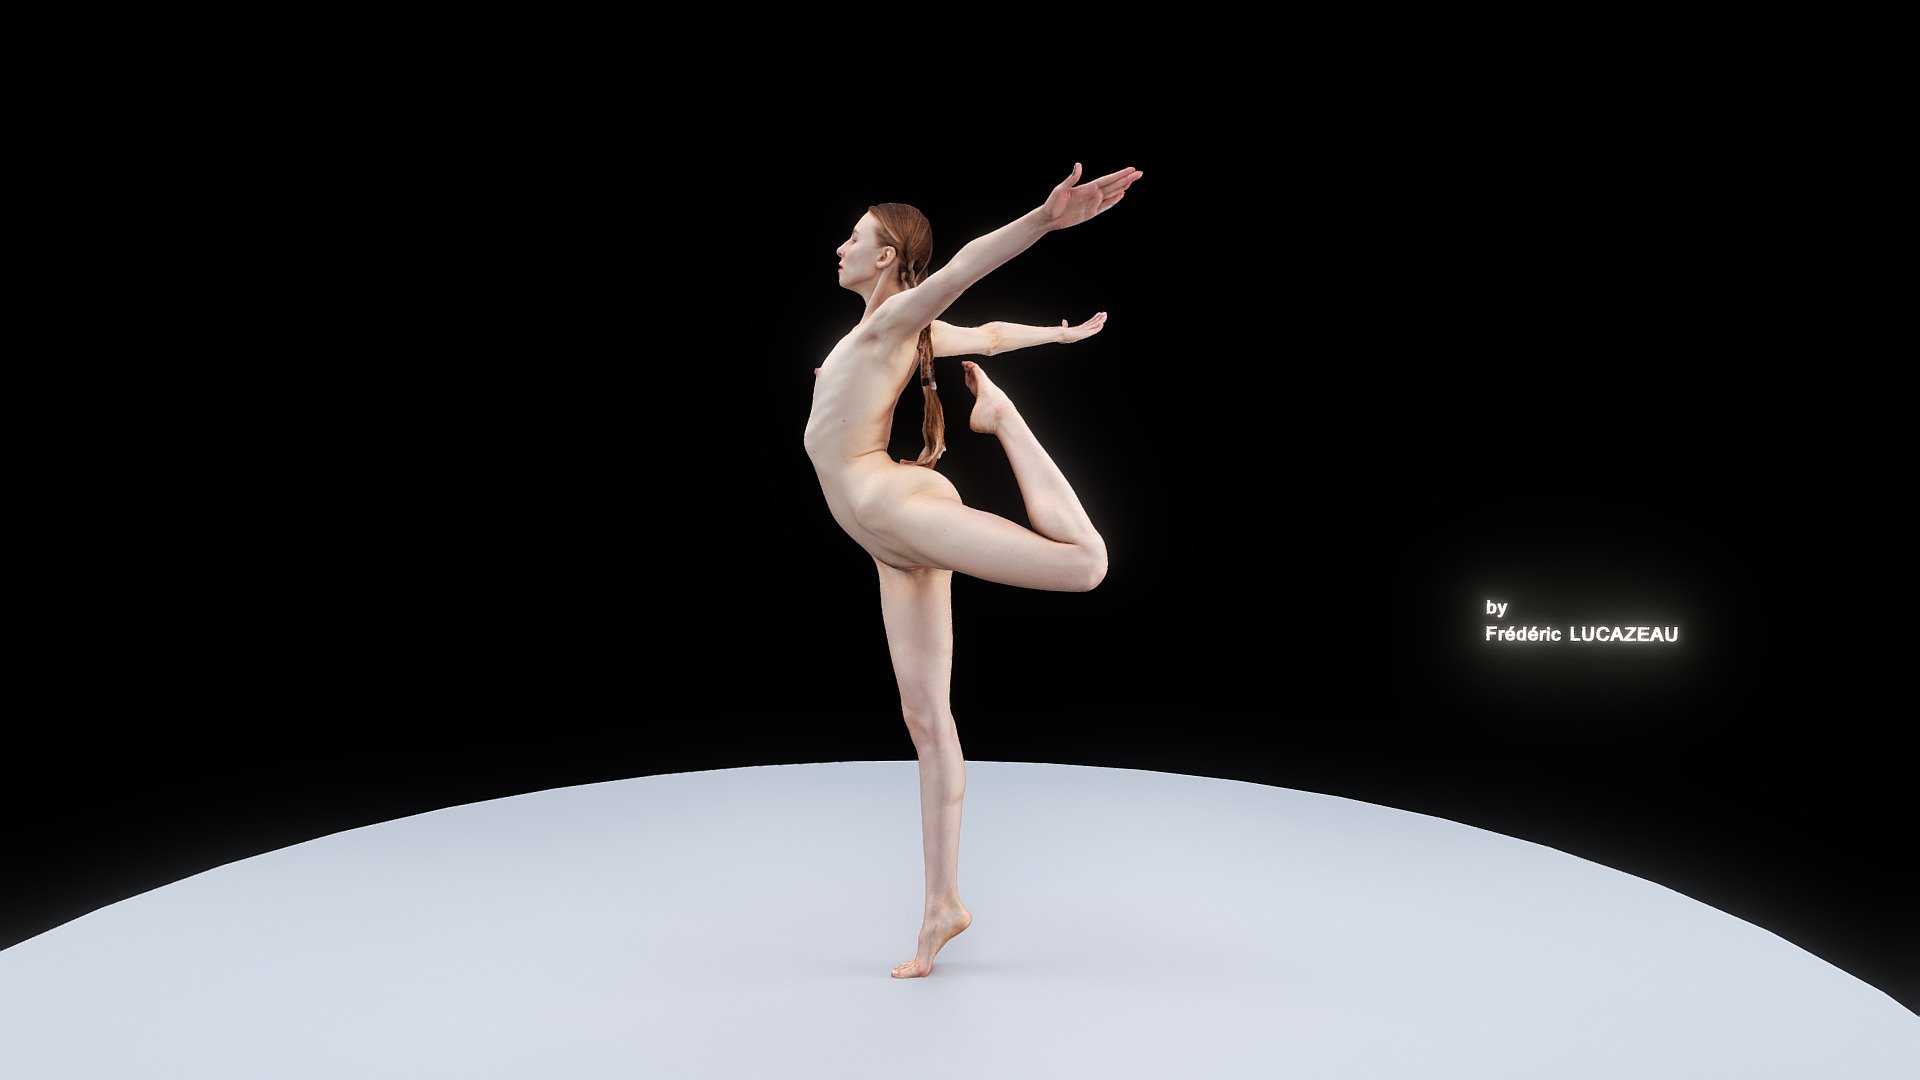 stella model dance jumping in a photostudio